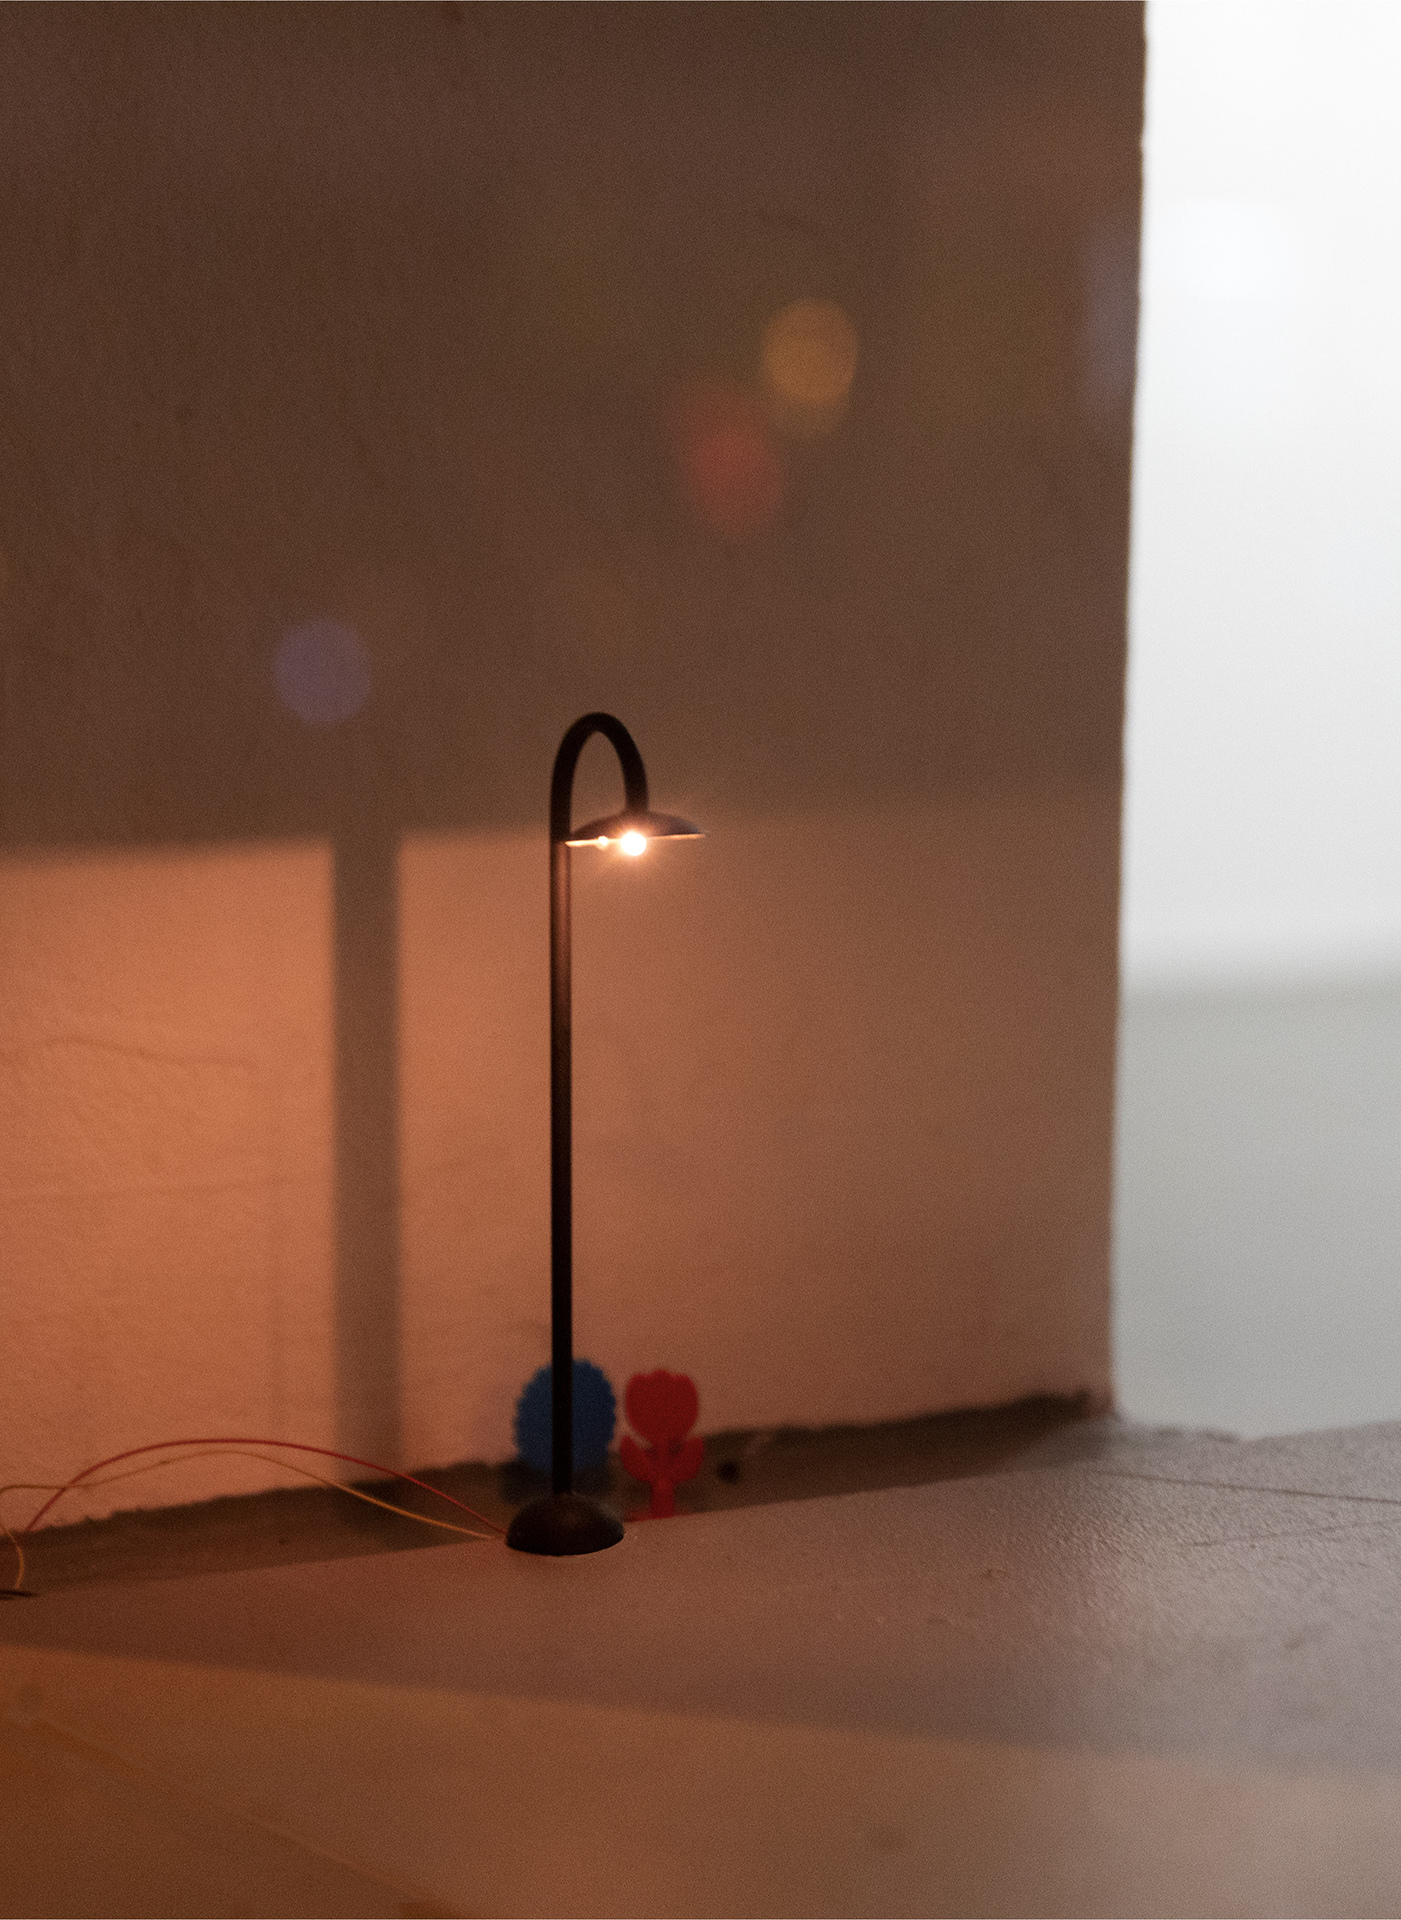 Giovanna Belossi & Francesco De Bernardi, Untitled (Inosservato), 2020, miniature streetlight, toy flowers, 12 cm